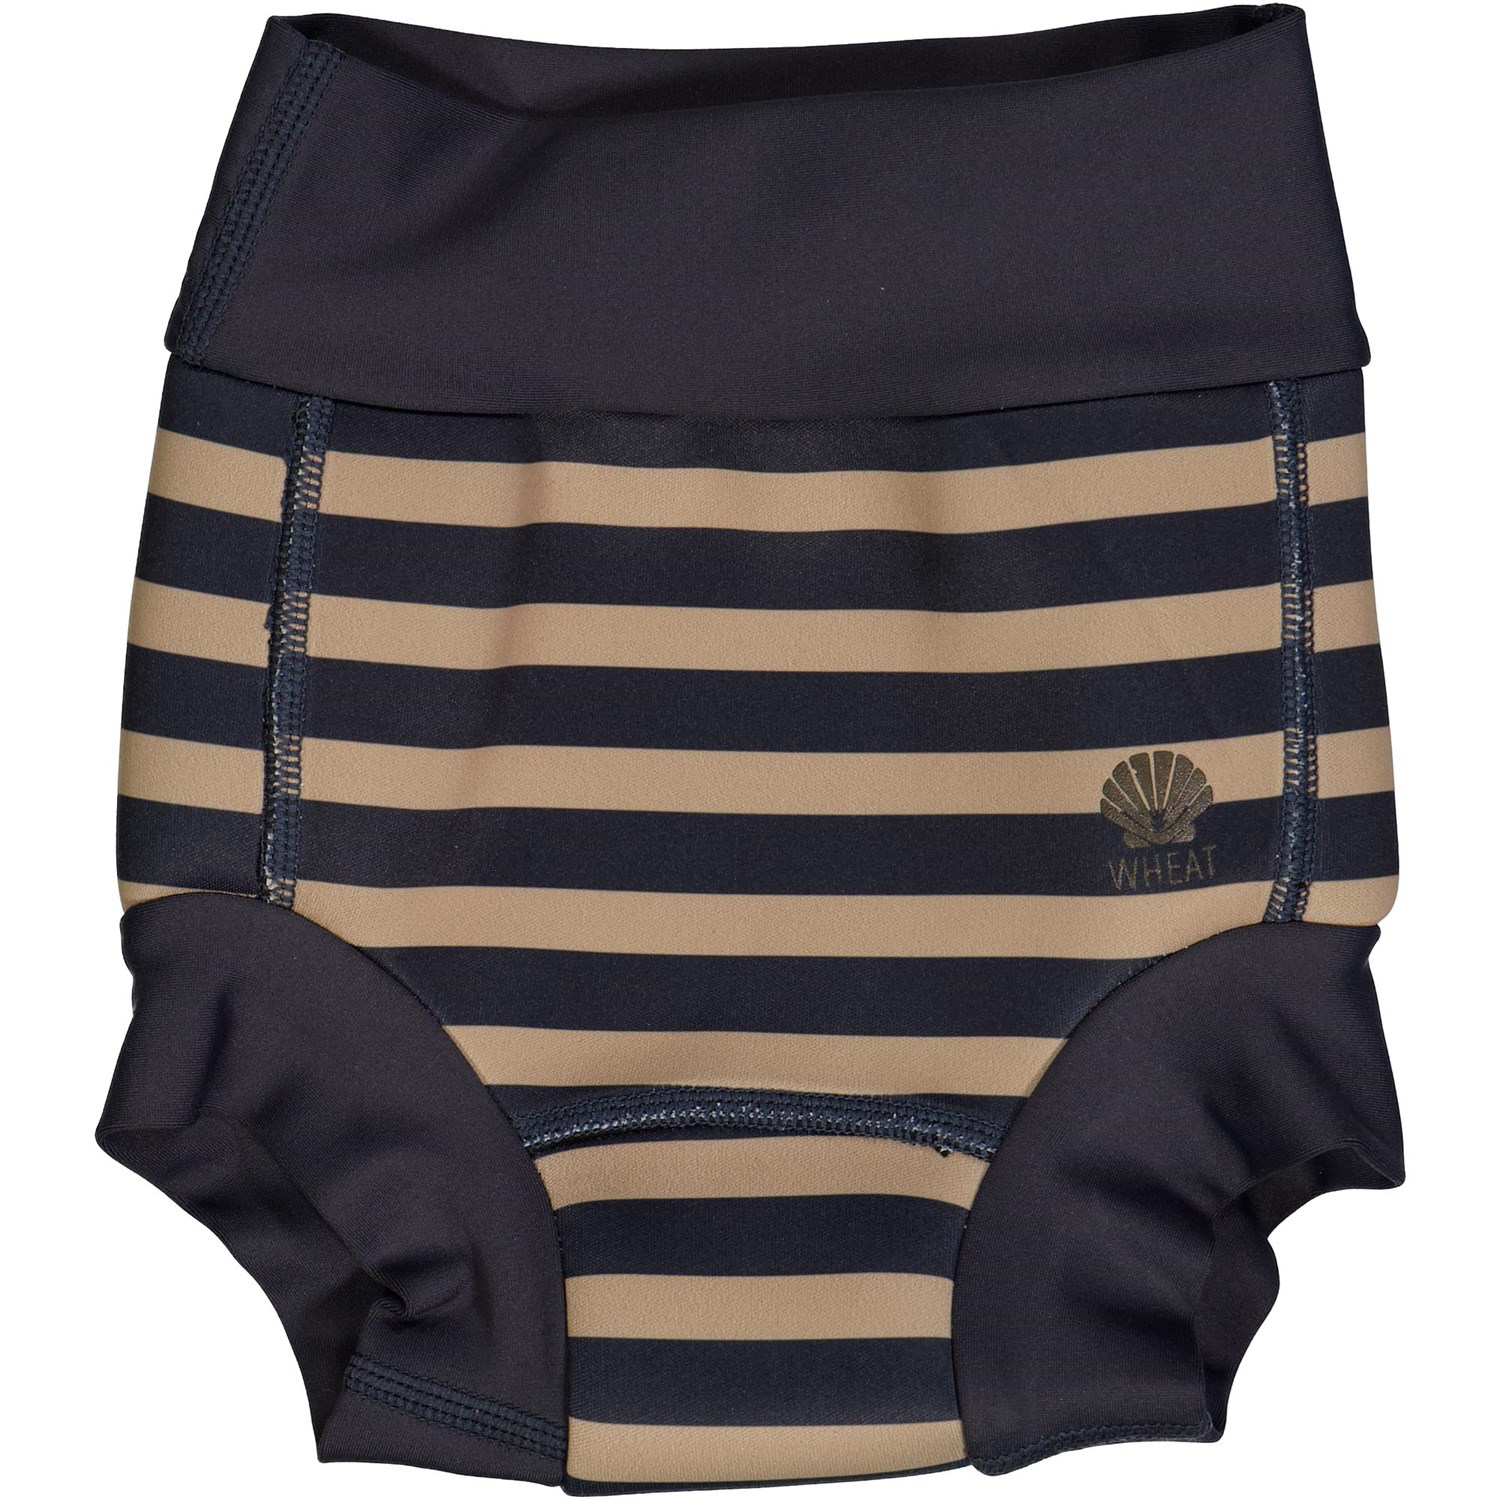 Wheat swim pants Ink stripe